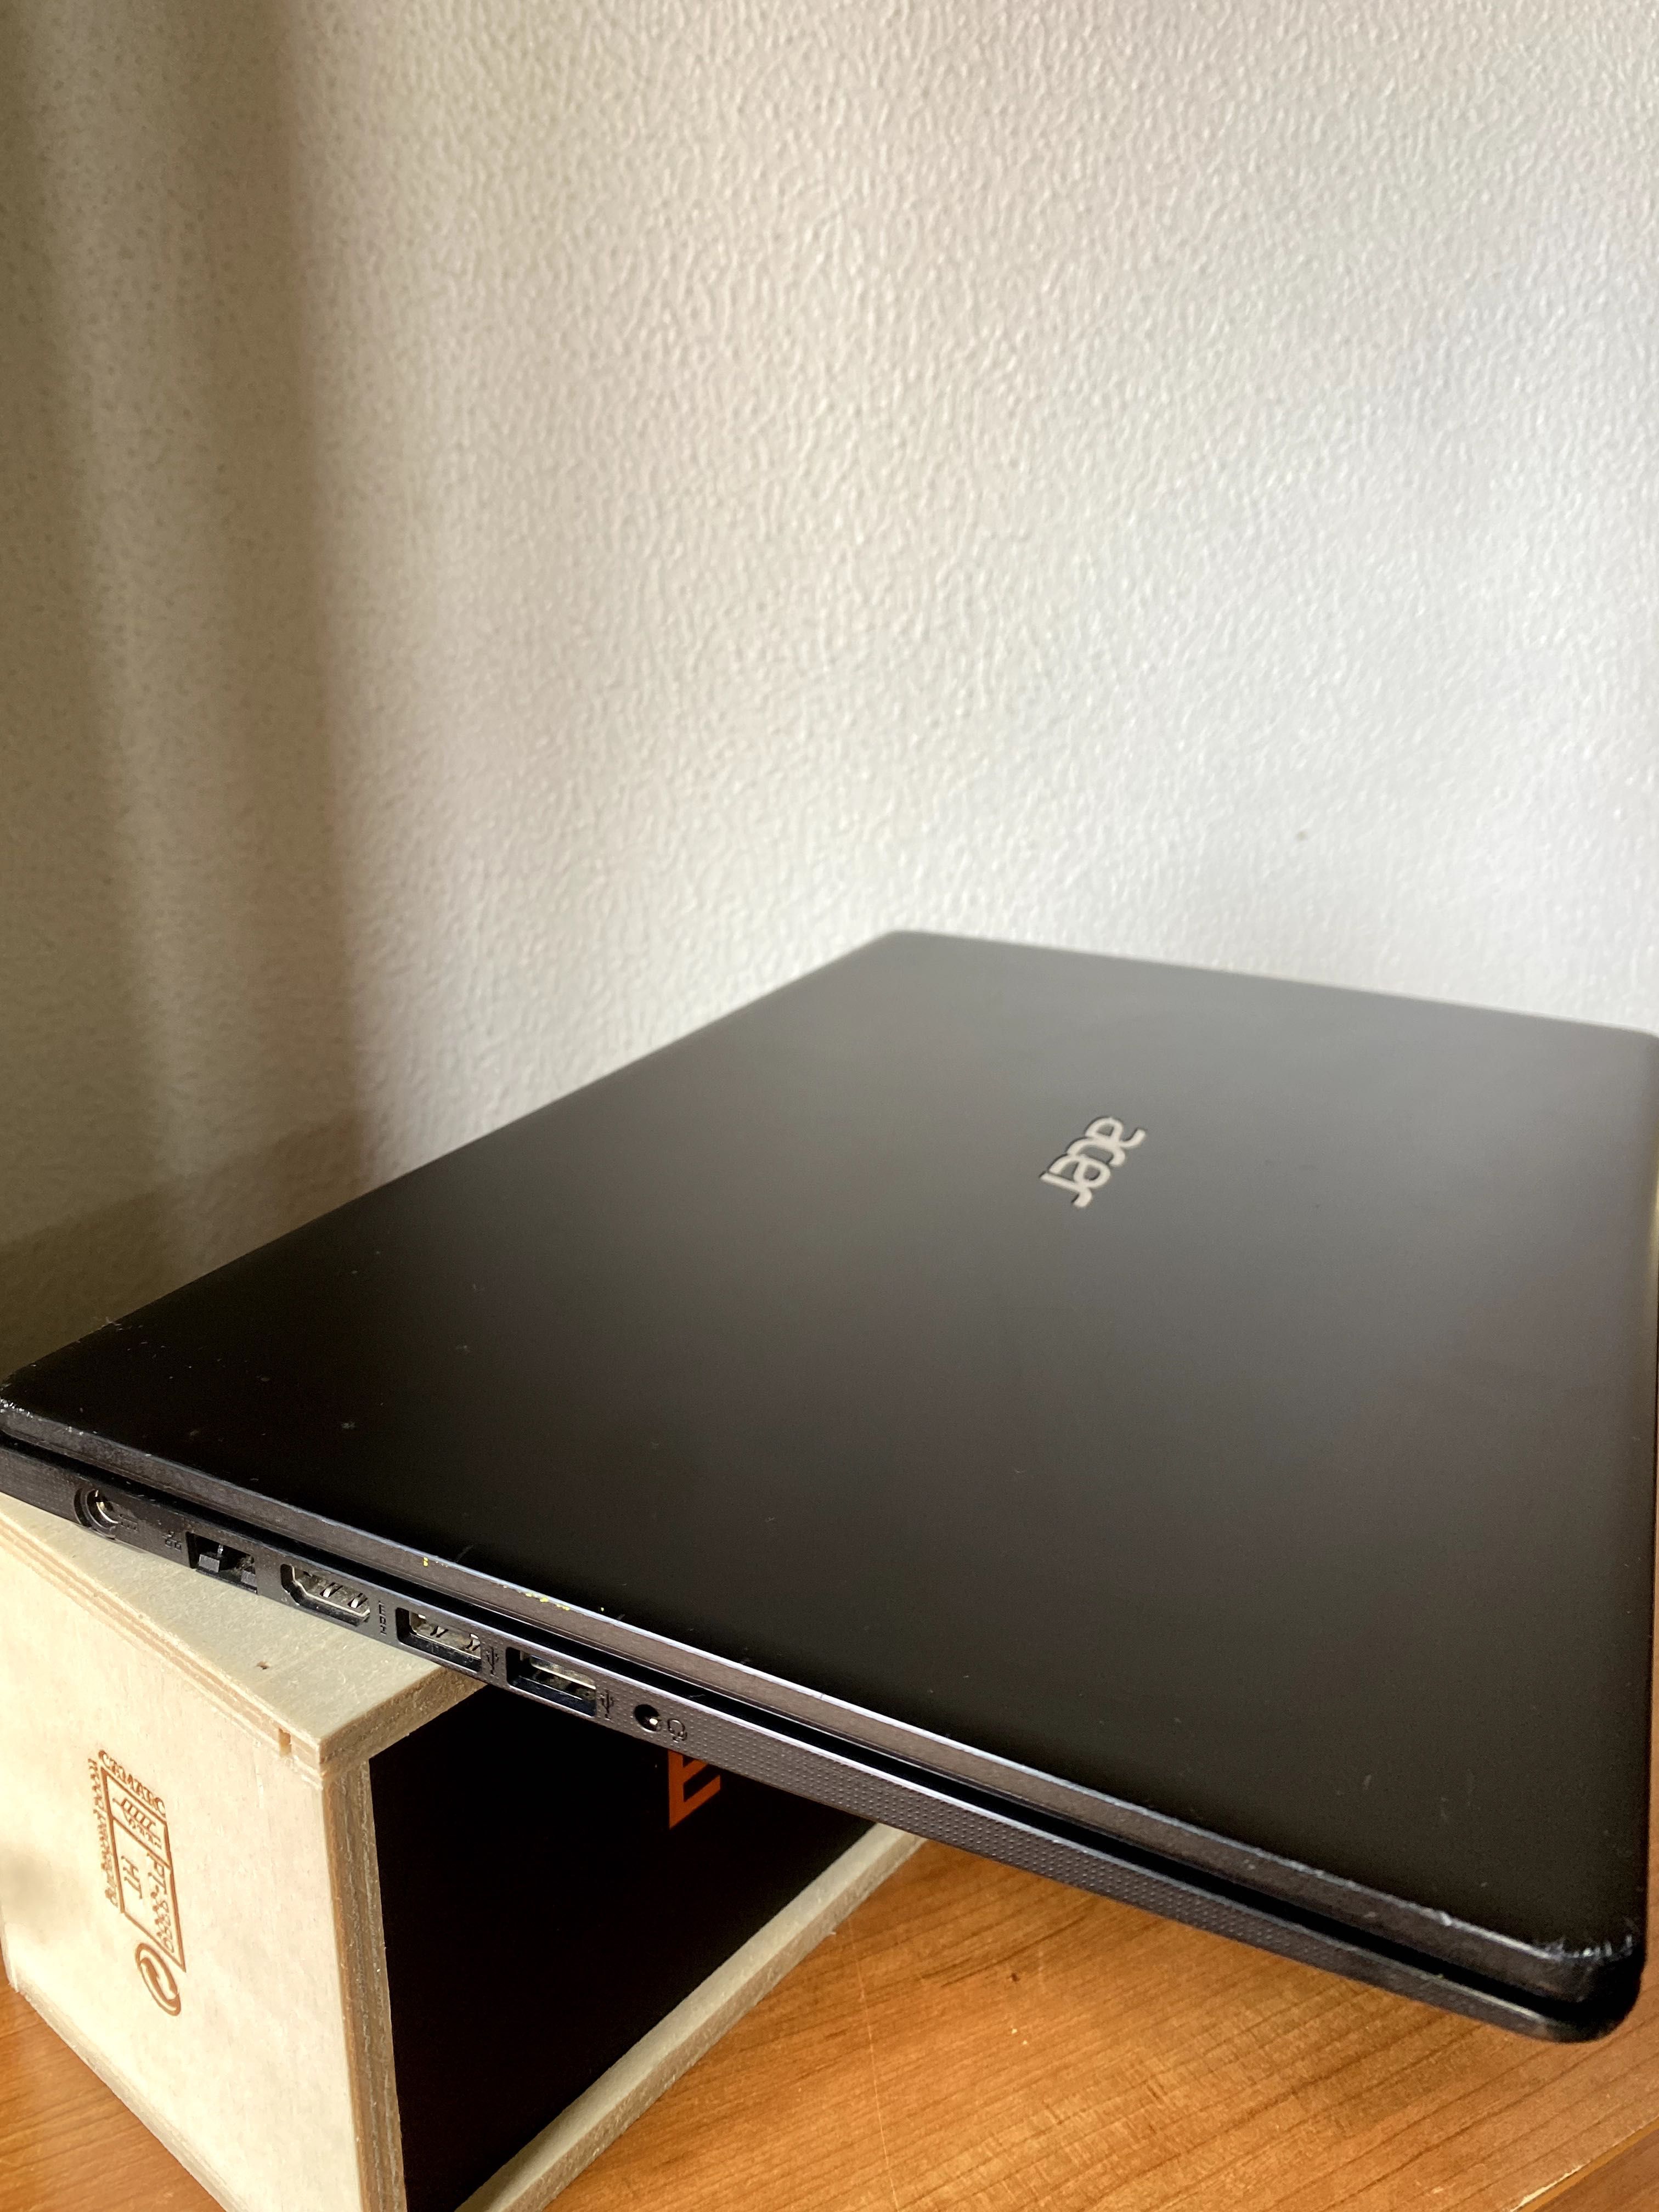 Portátil Acer - completamente funcional